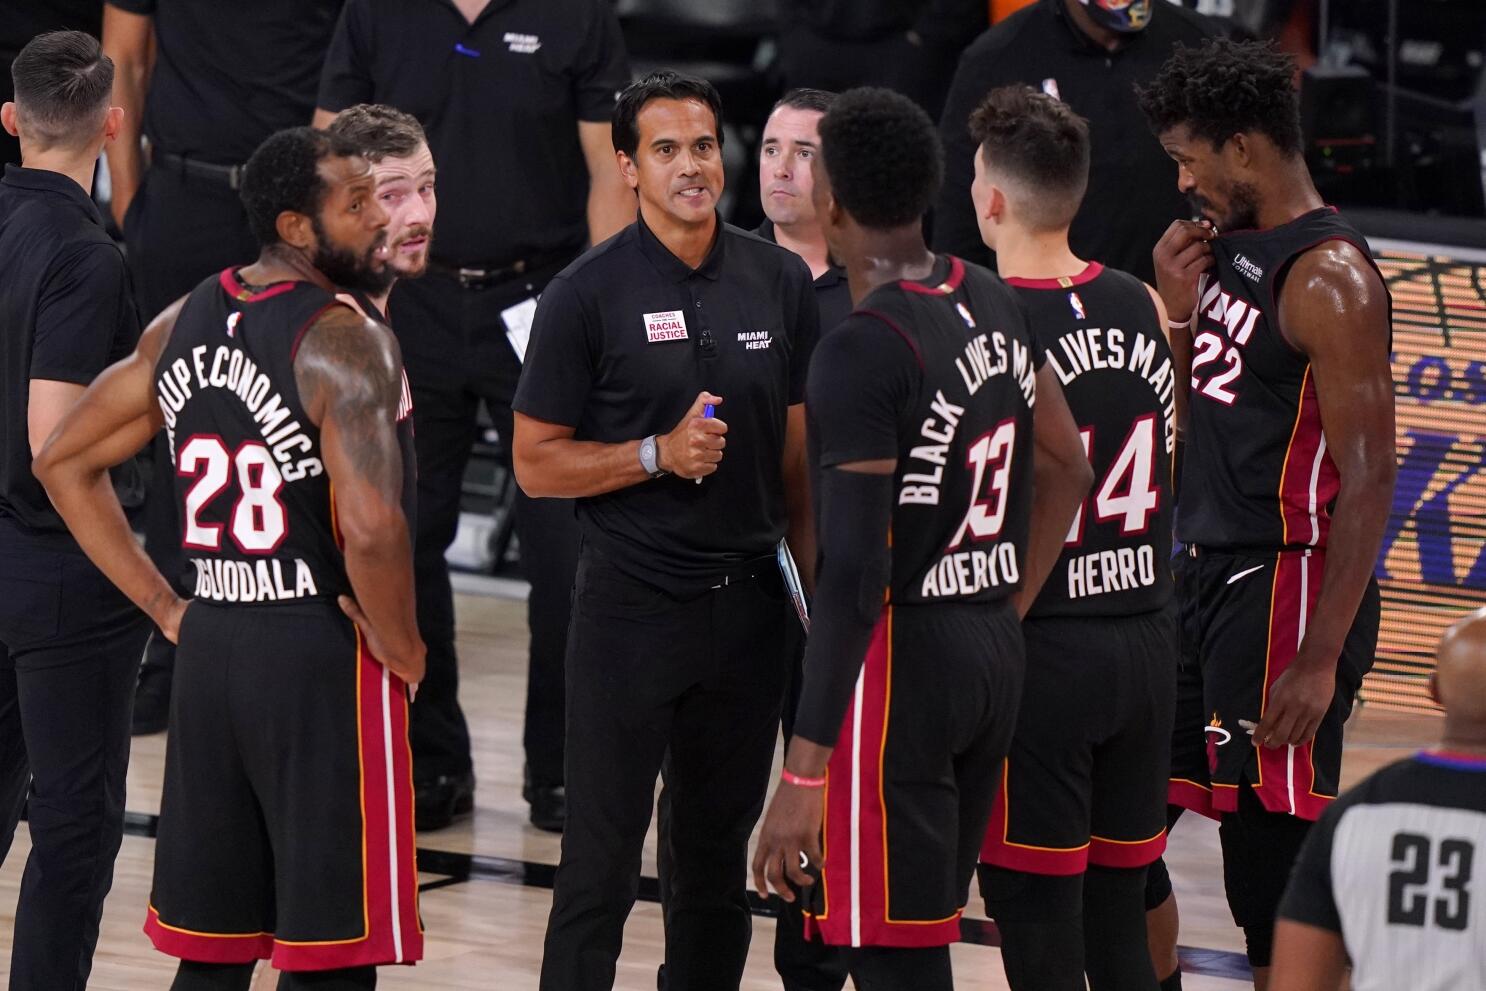 Miami Heat rookie Tyler Herro '100 per cent' healthy, says coach